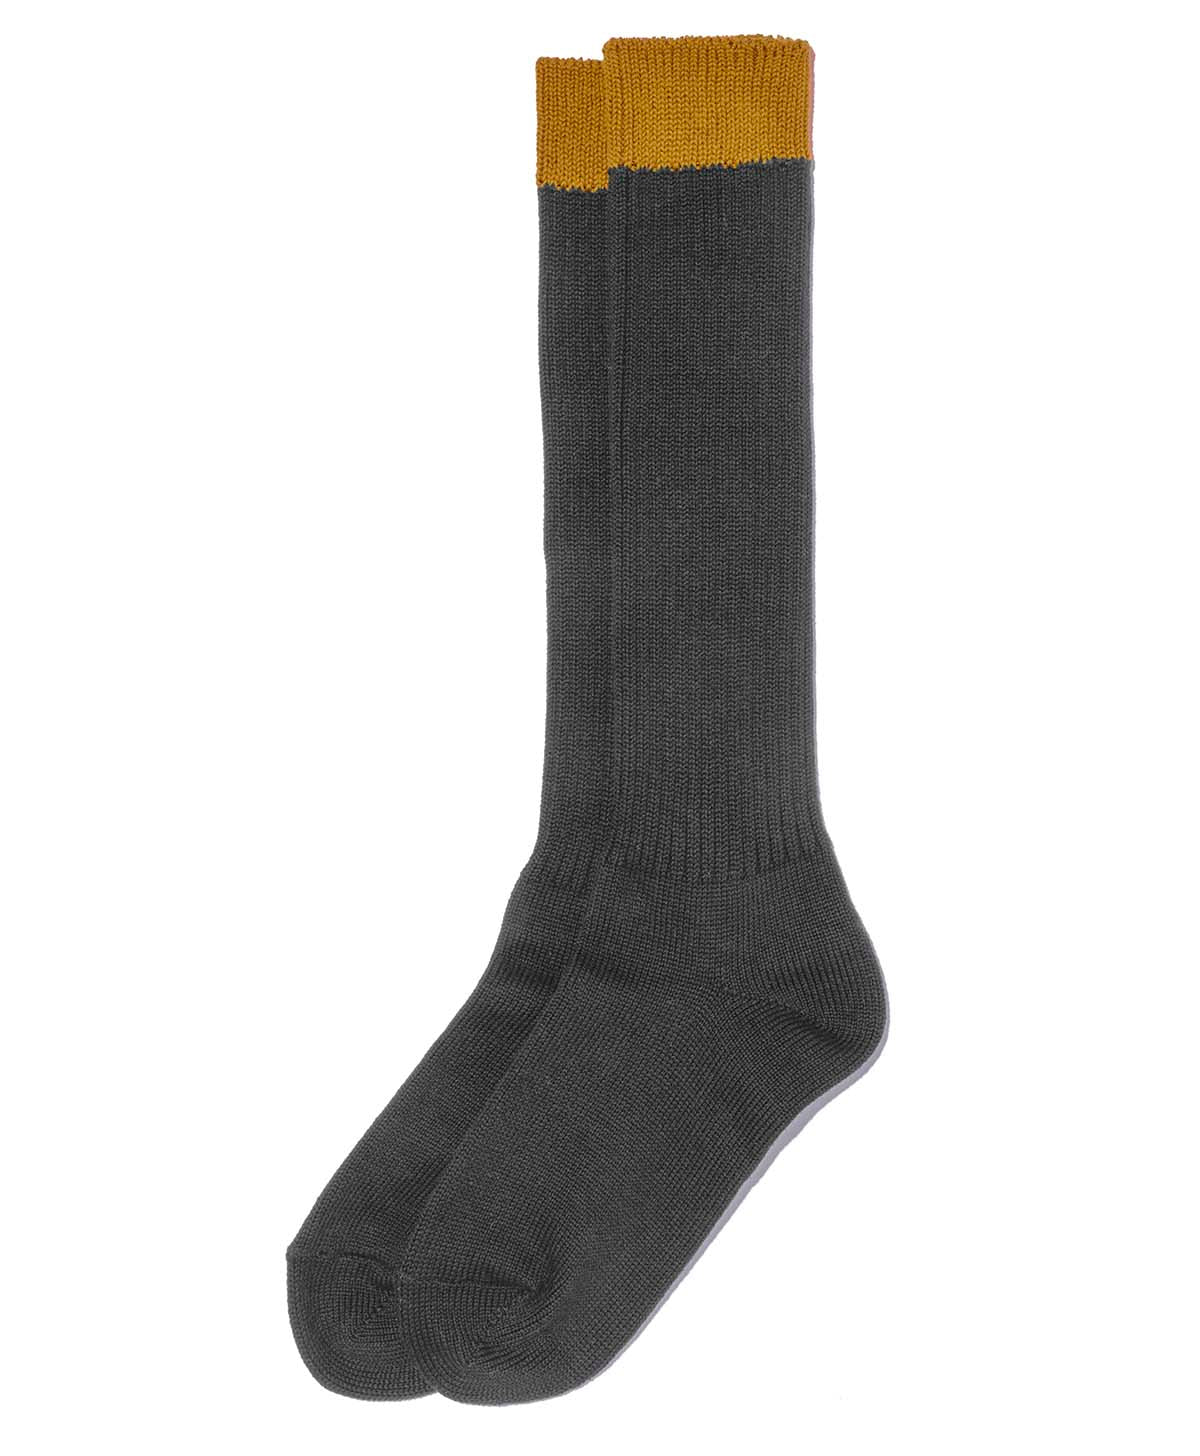 Boots Socks / arang abu -abu / kuning (wanita)